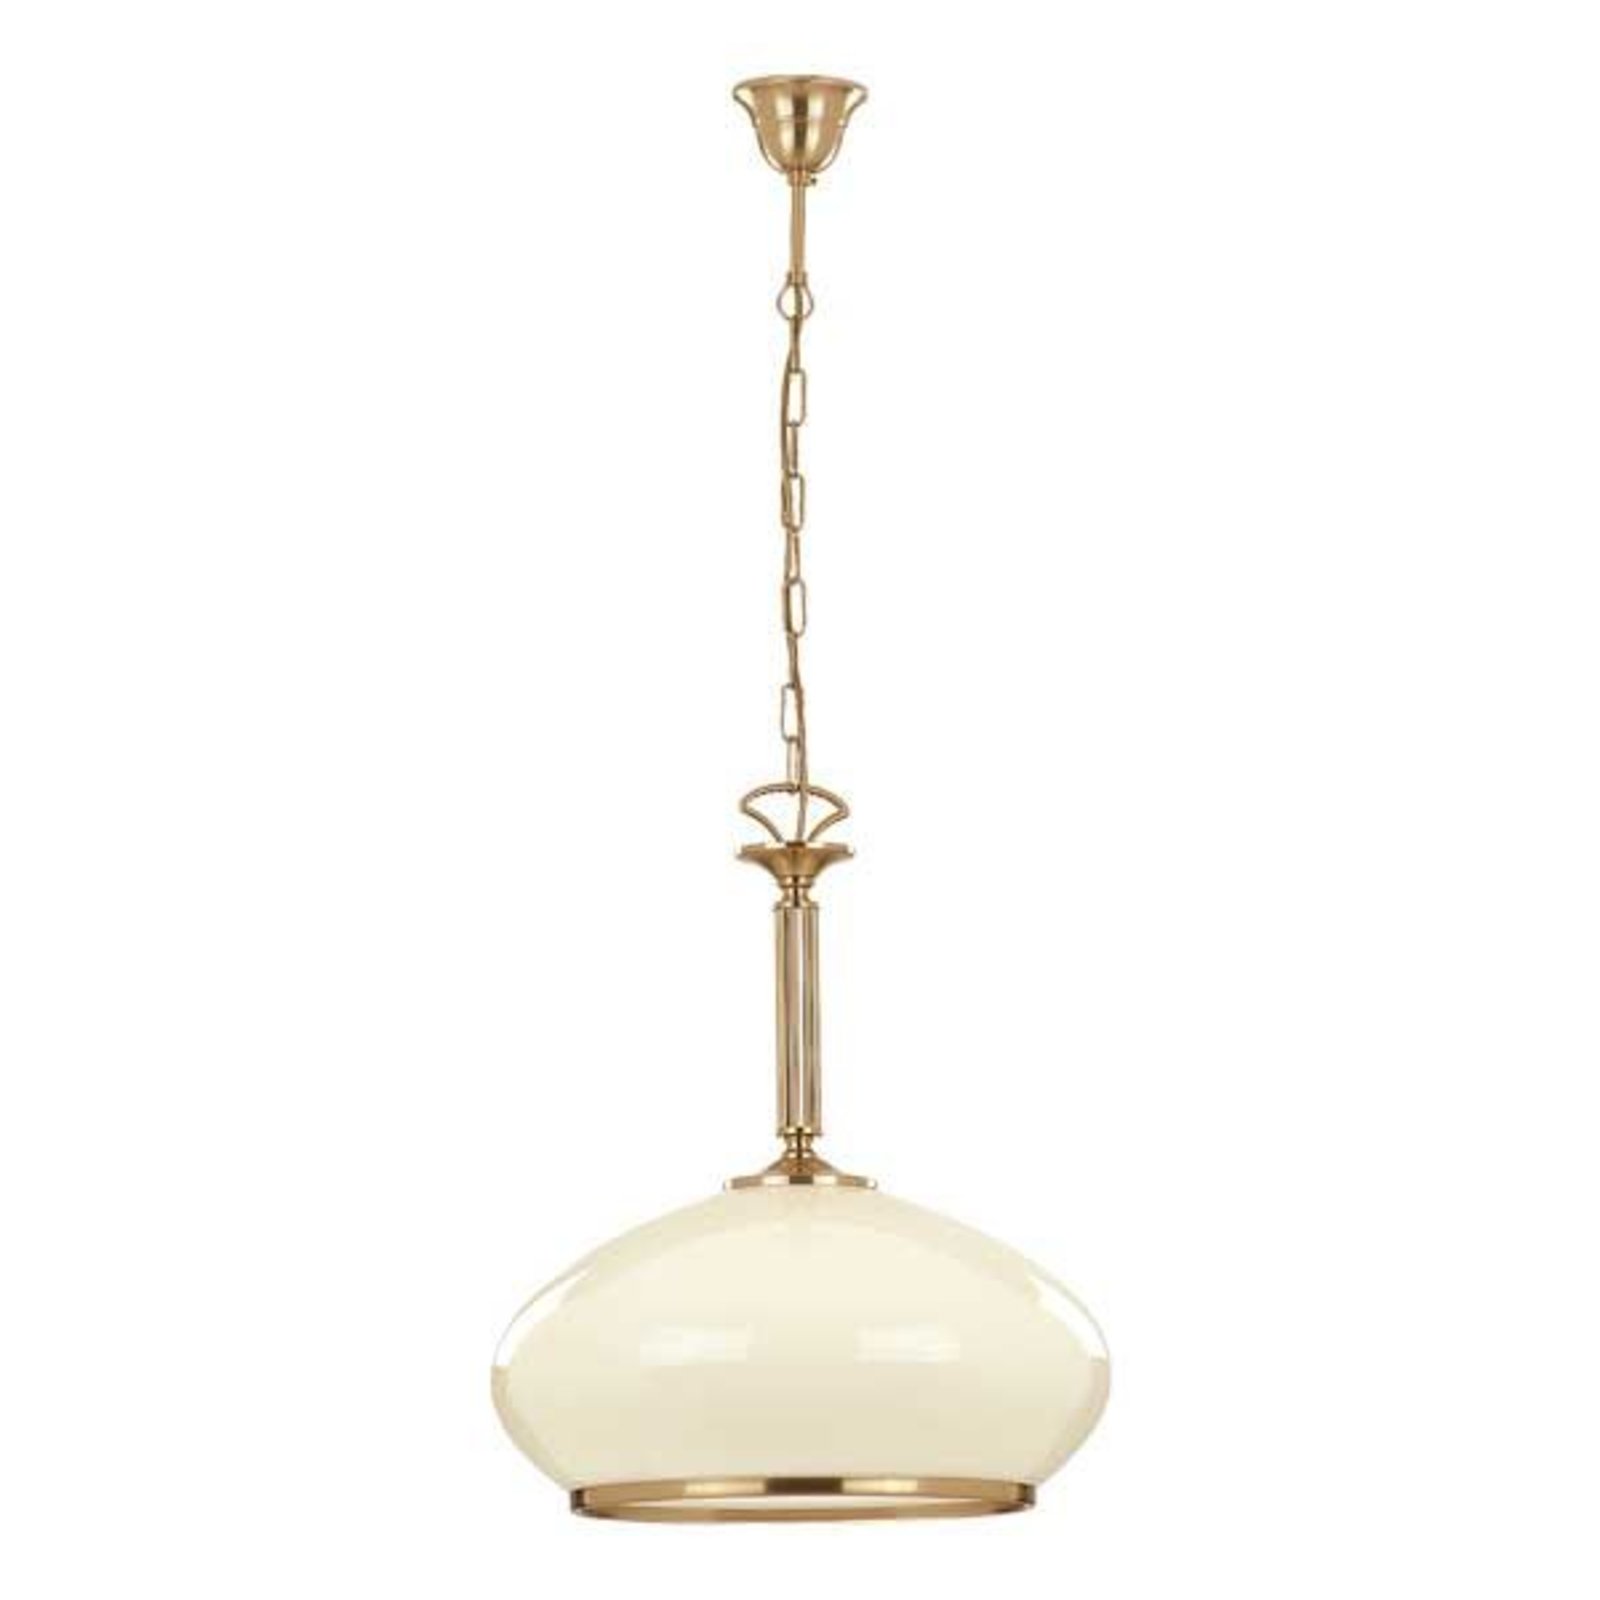 Astoria pendant light glass lampshade, white/gold